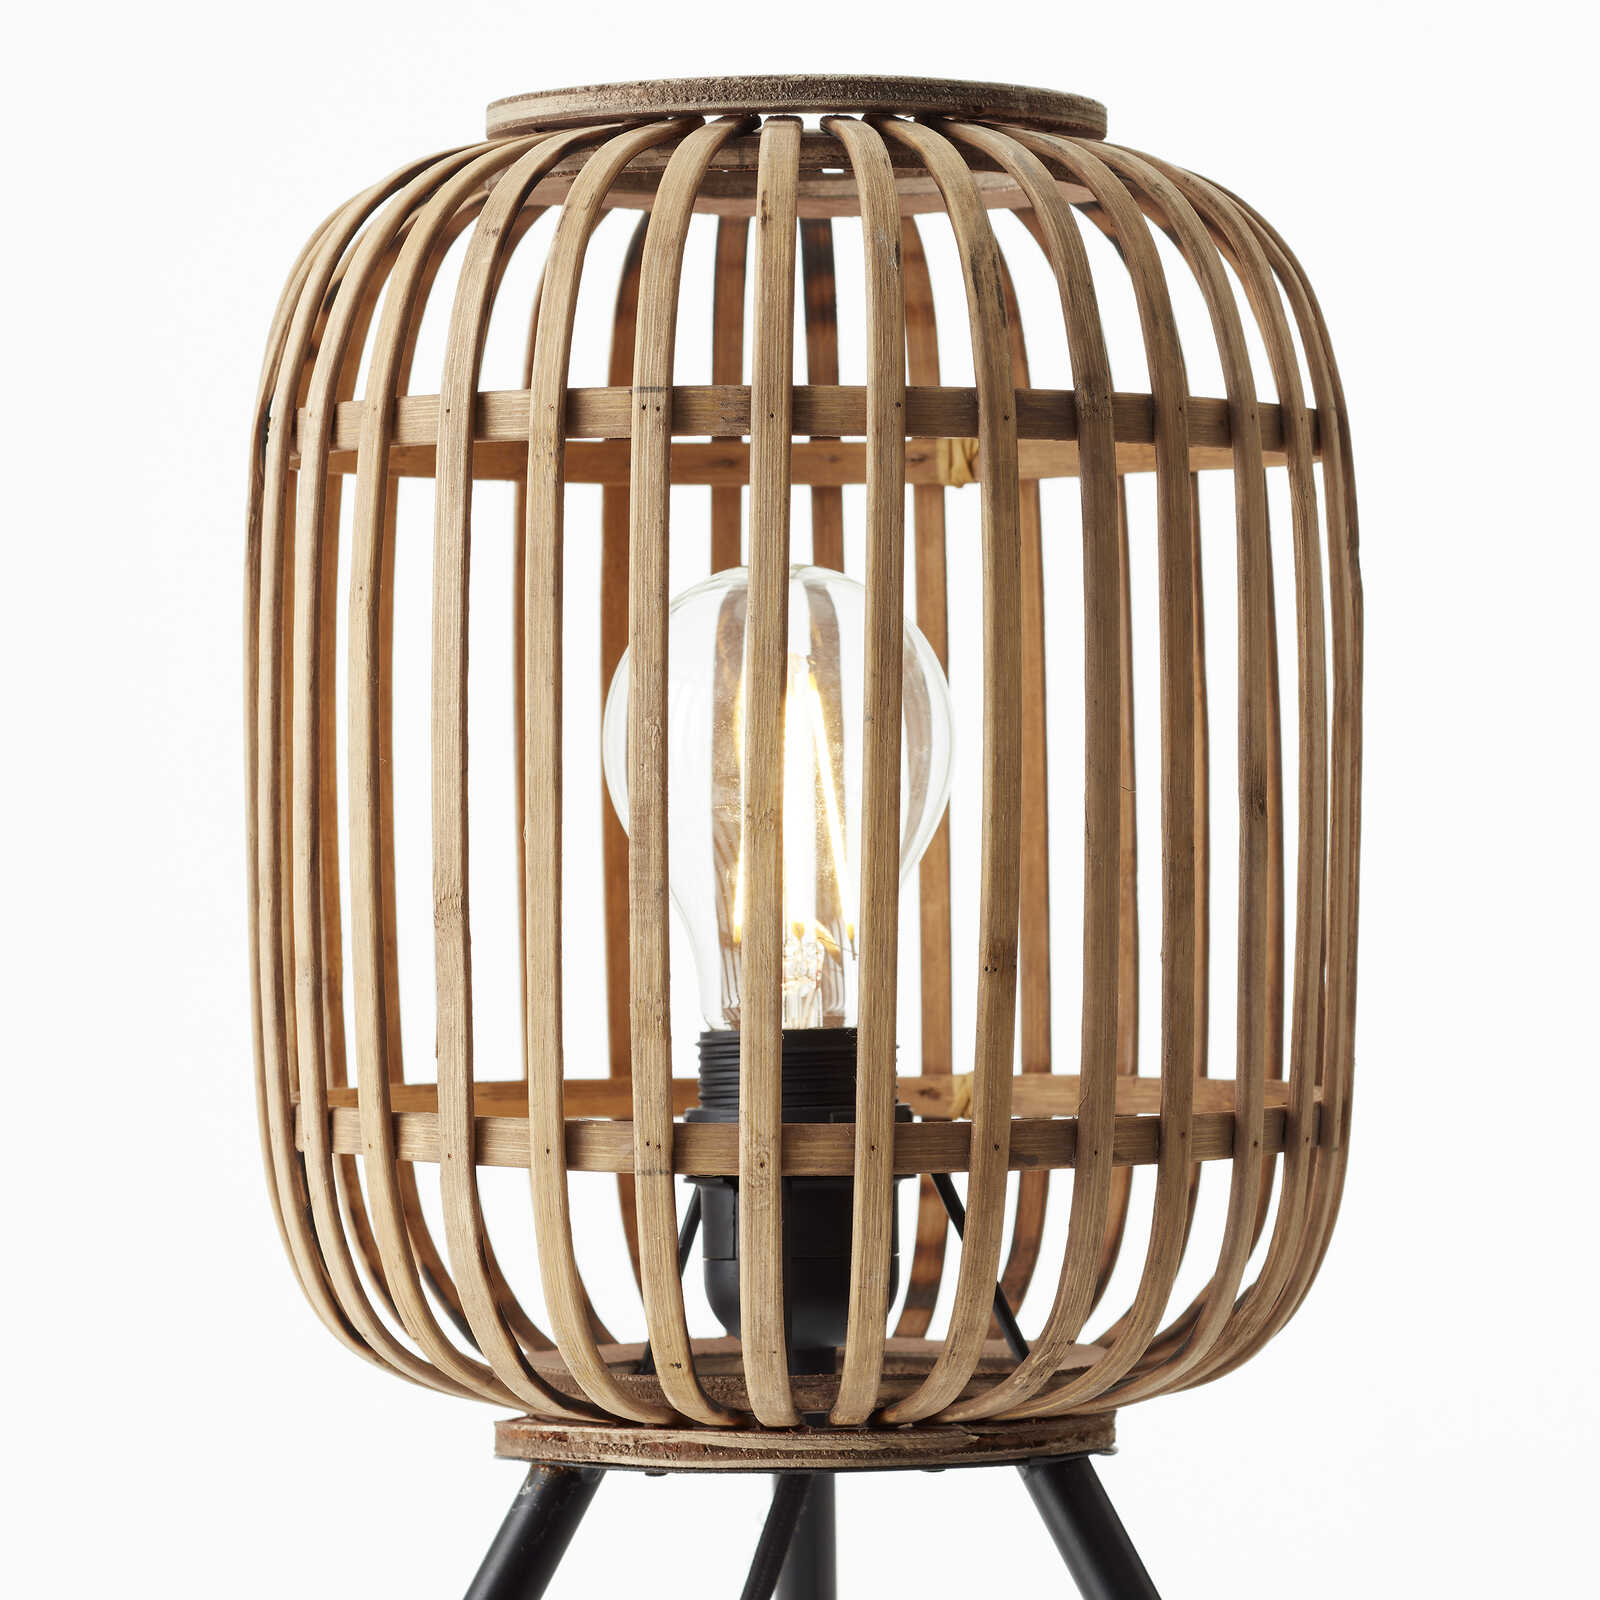             Bamboo table lamp - Willi 2 - Brown
        